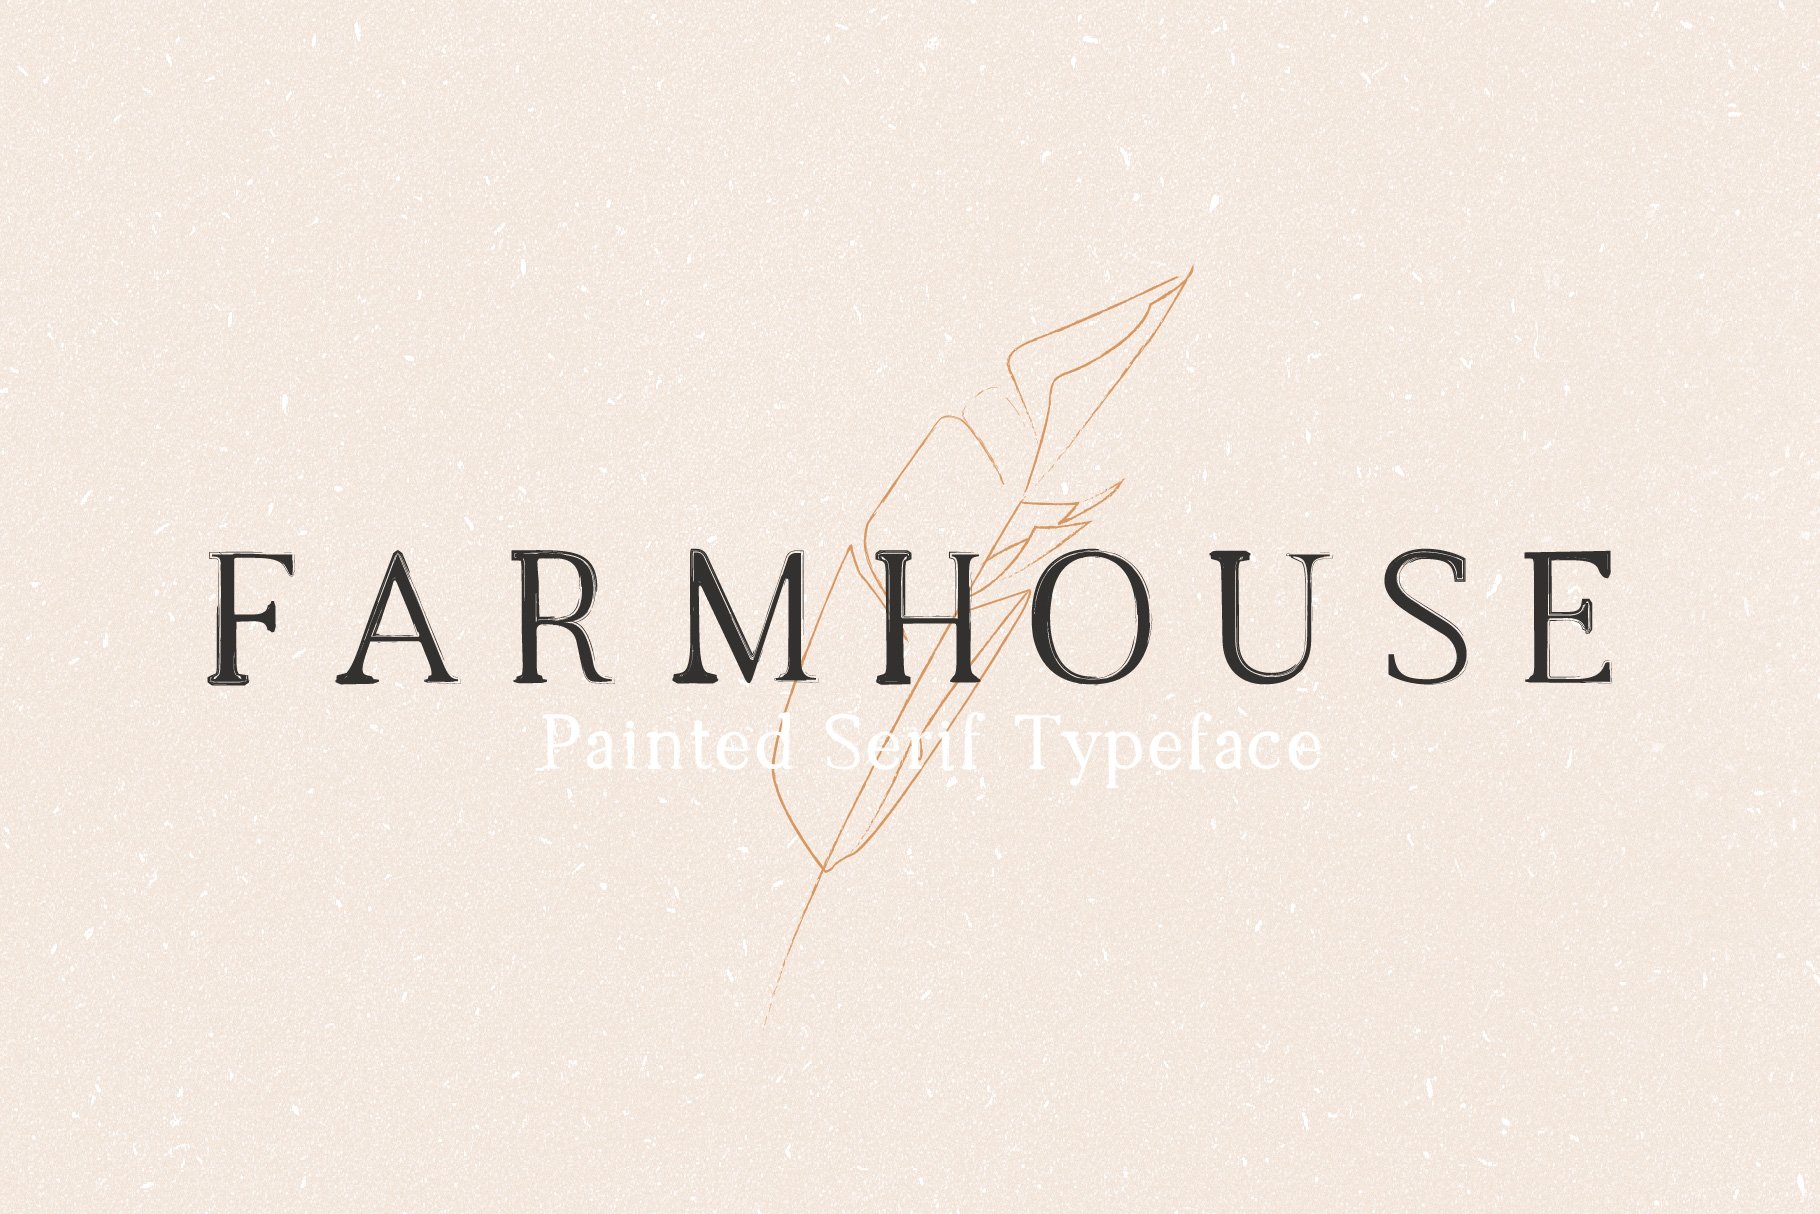 Farmhouse - Painted Serif Font cover image.